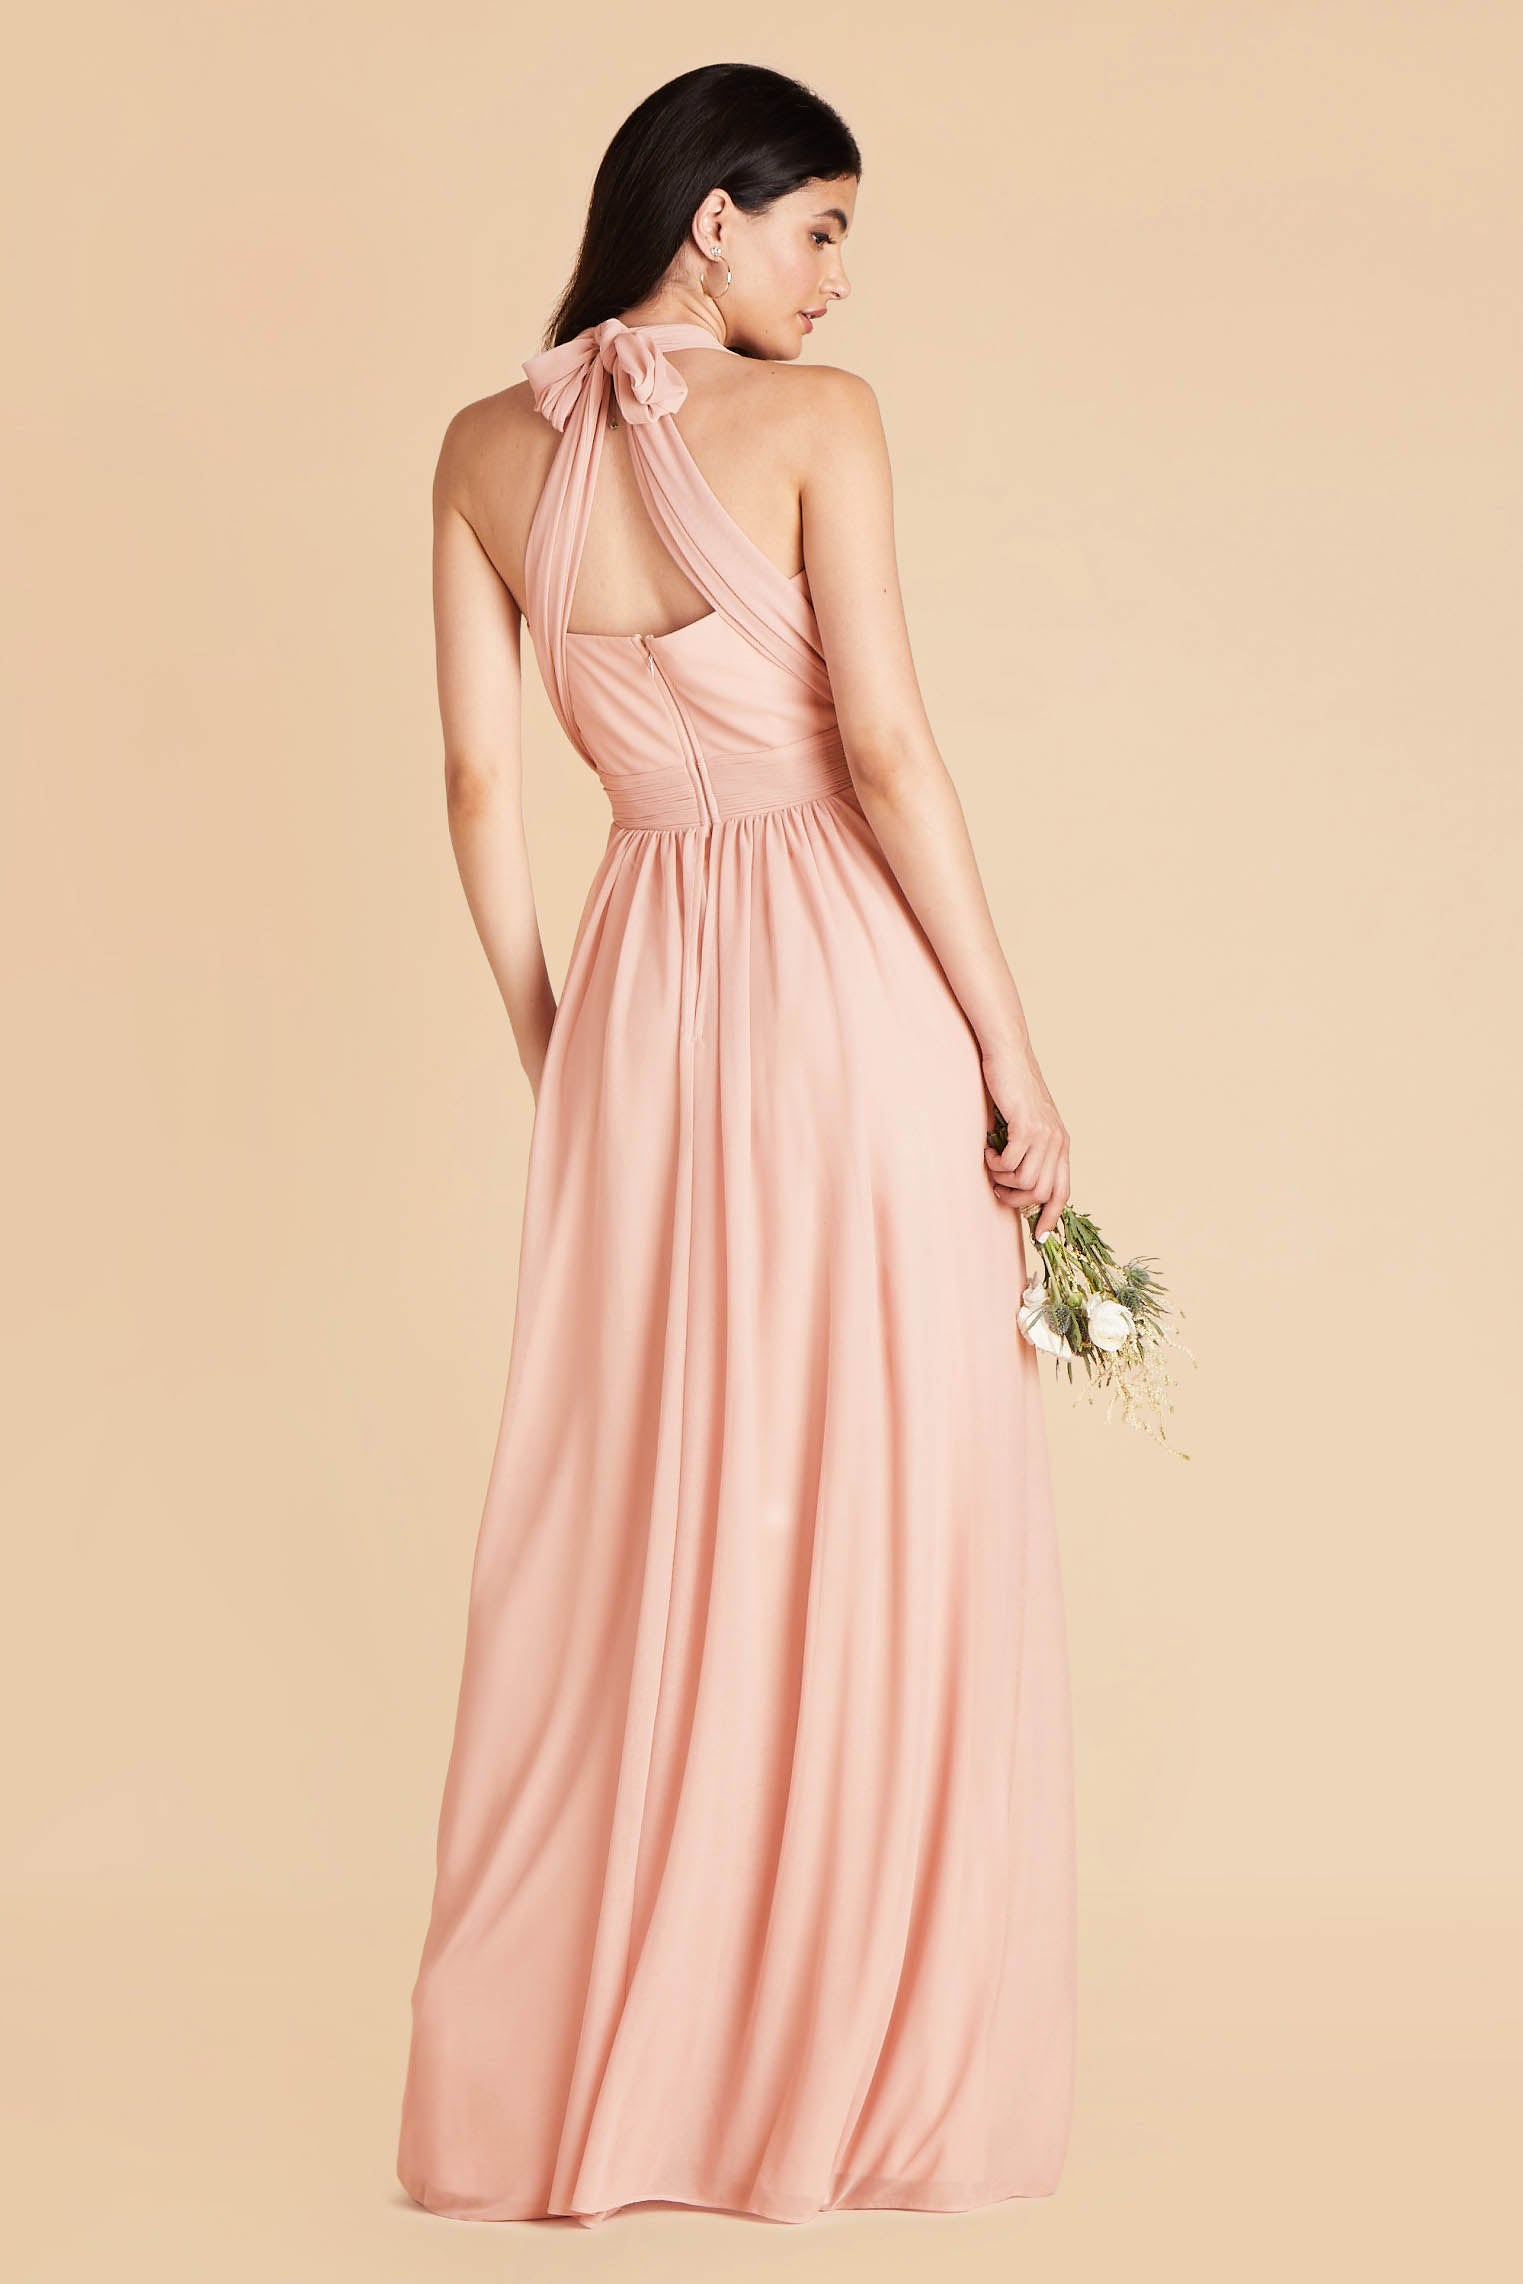 Grace convertible bridesmaid dress in Blush Pink Chiffon